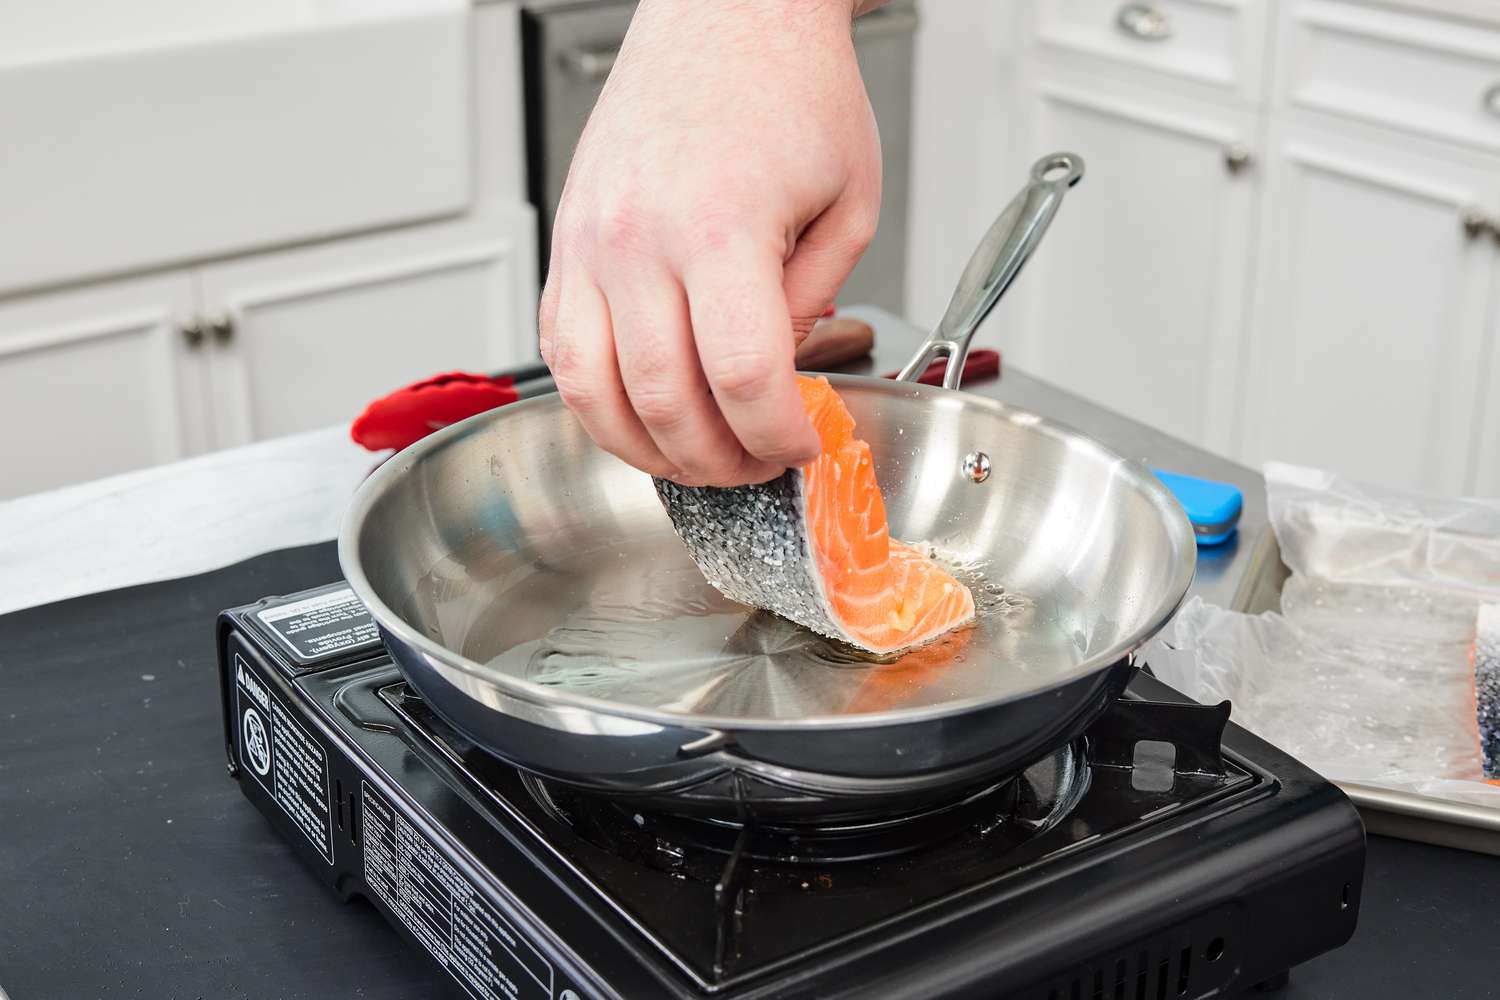 Placing a salmon filet into the Goldilocks pan during testing